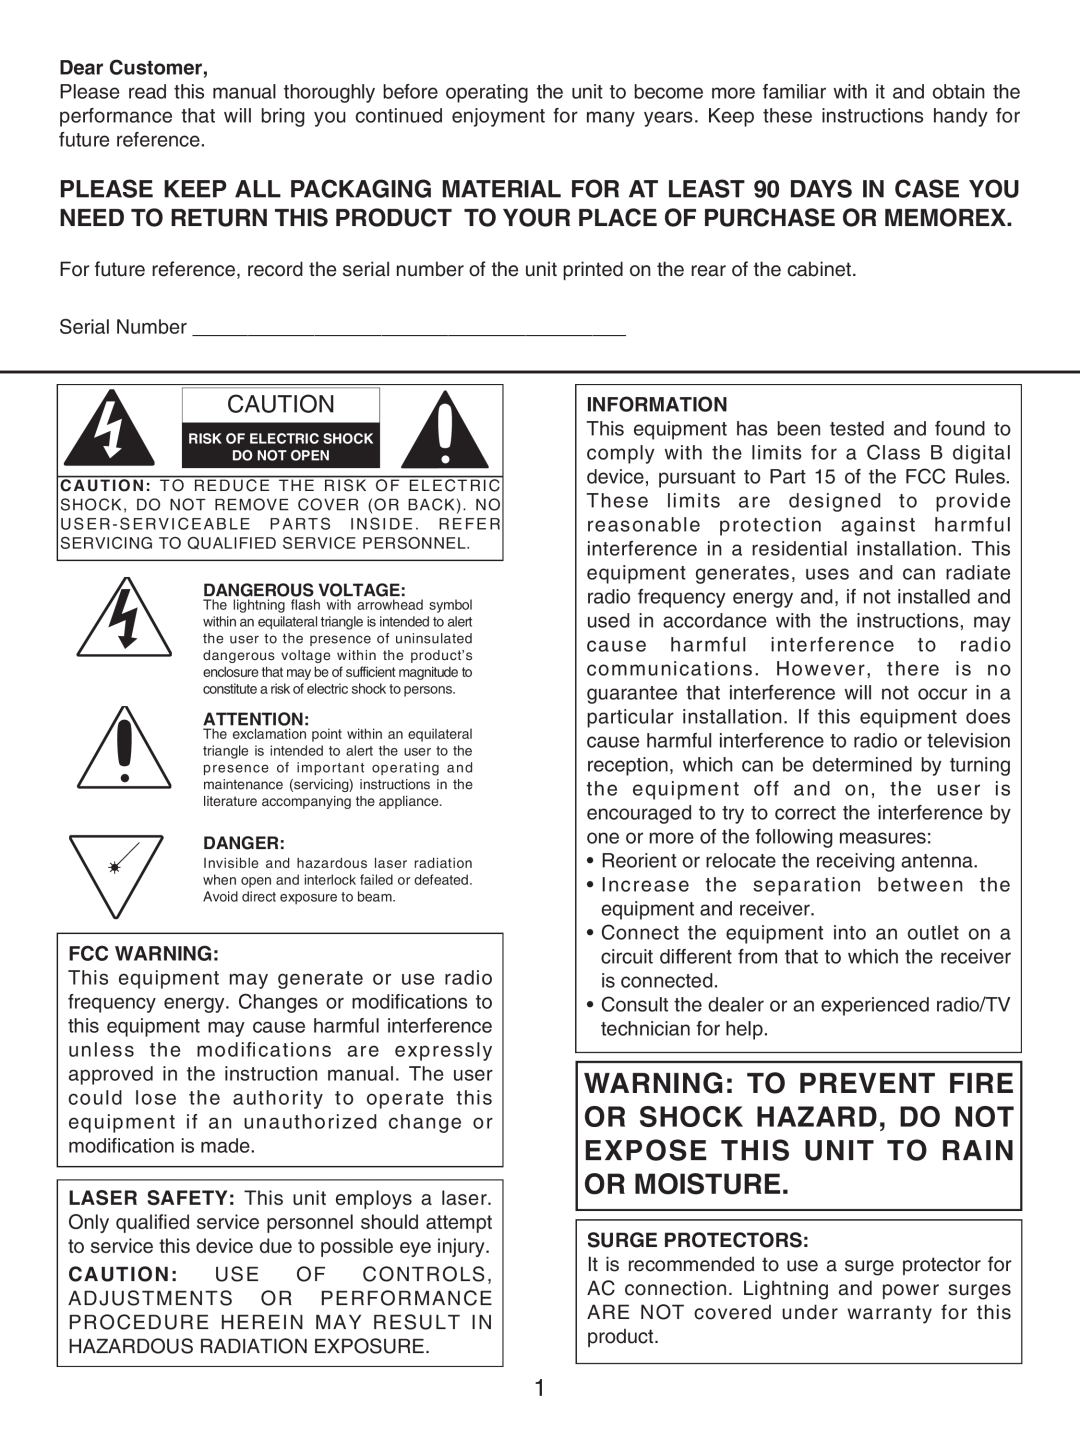 Memorex MKS8503 manual Fcc Warning, Information, Surge Protectors 